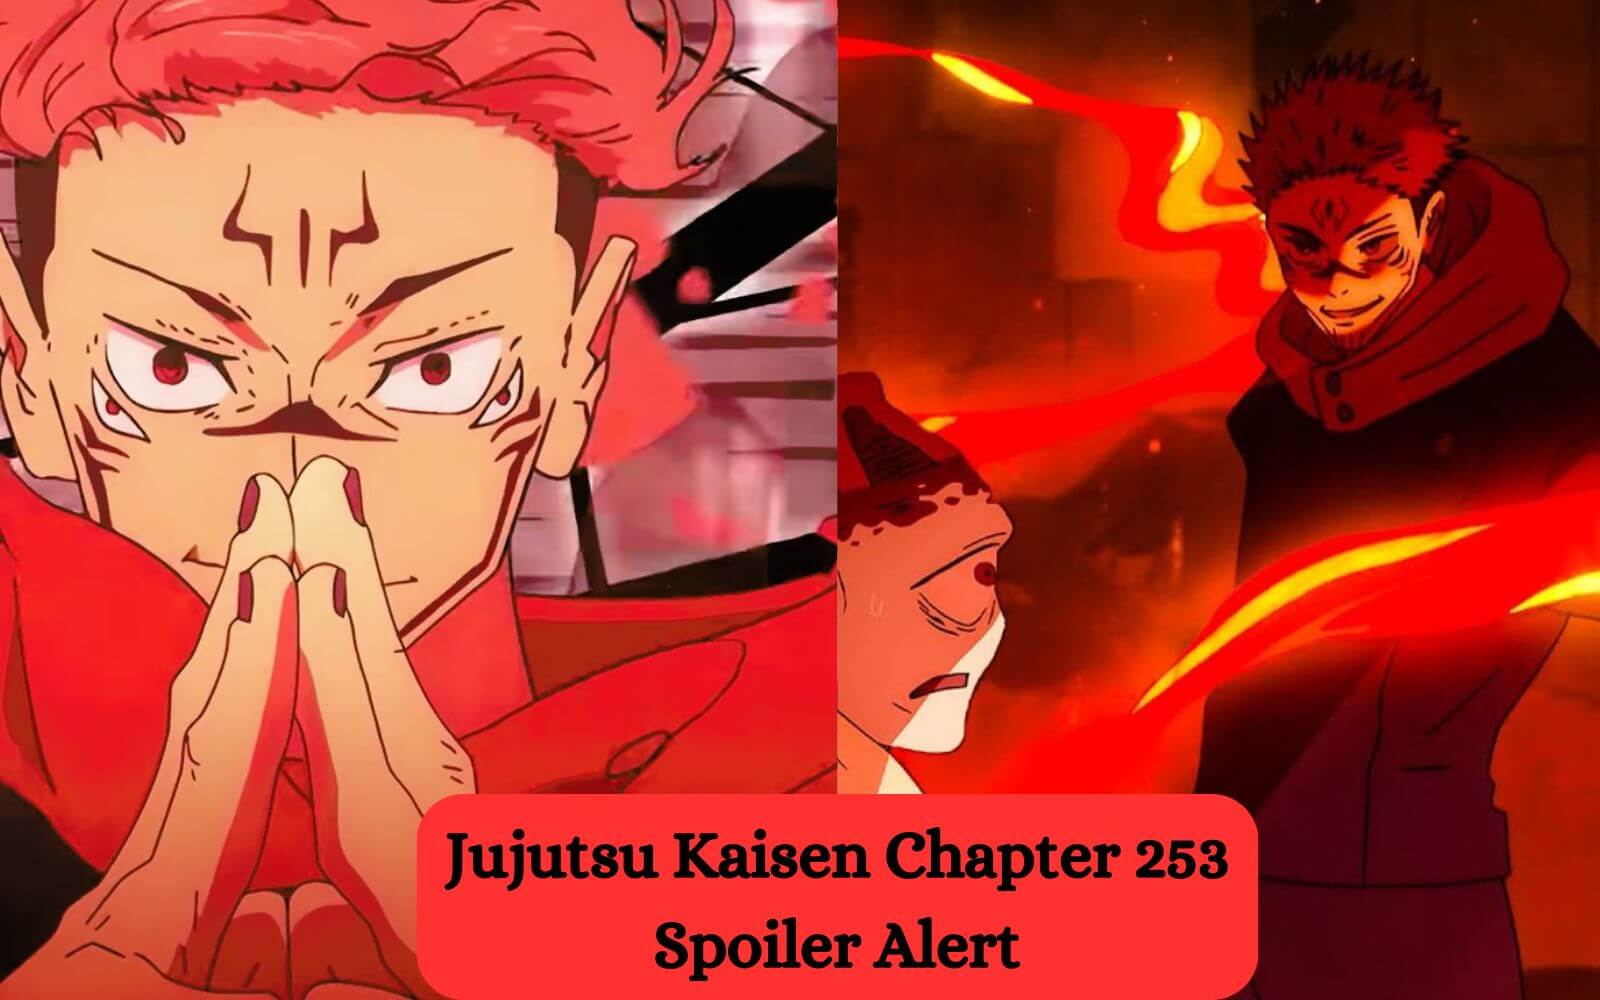 Jujutsu Kaisen chapter 253 Spoiler Alert 